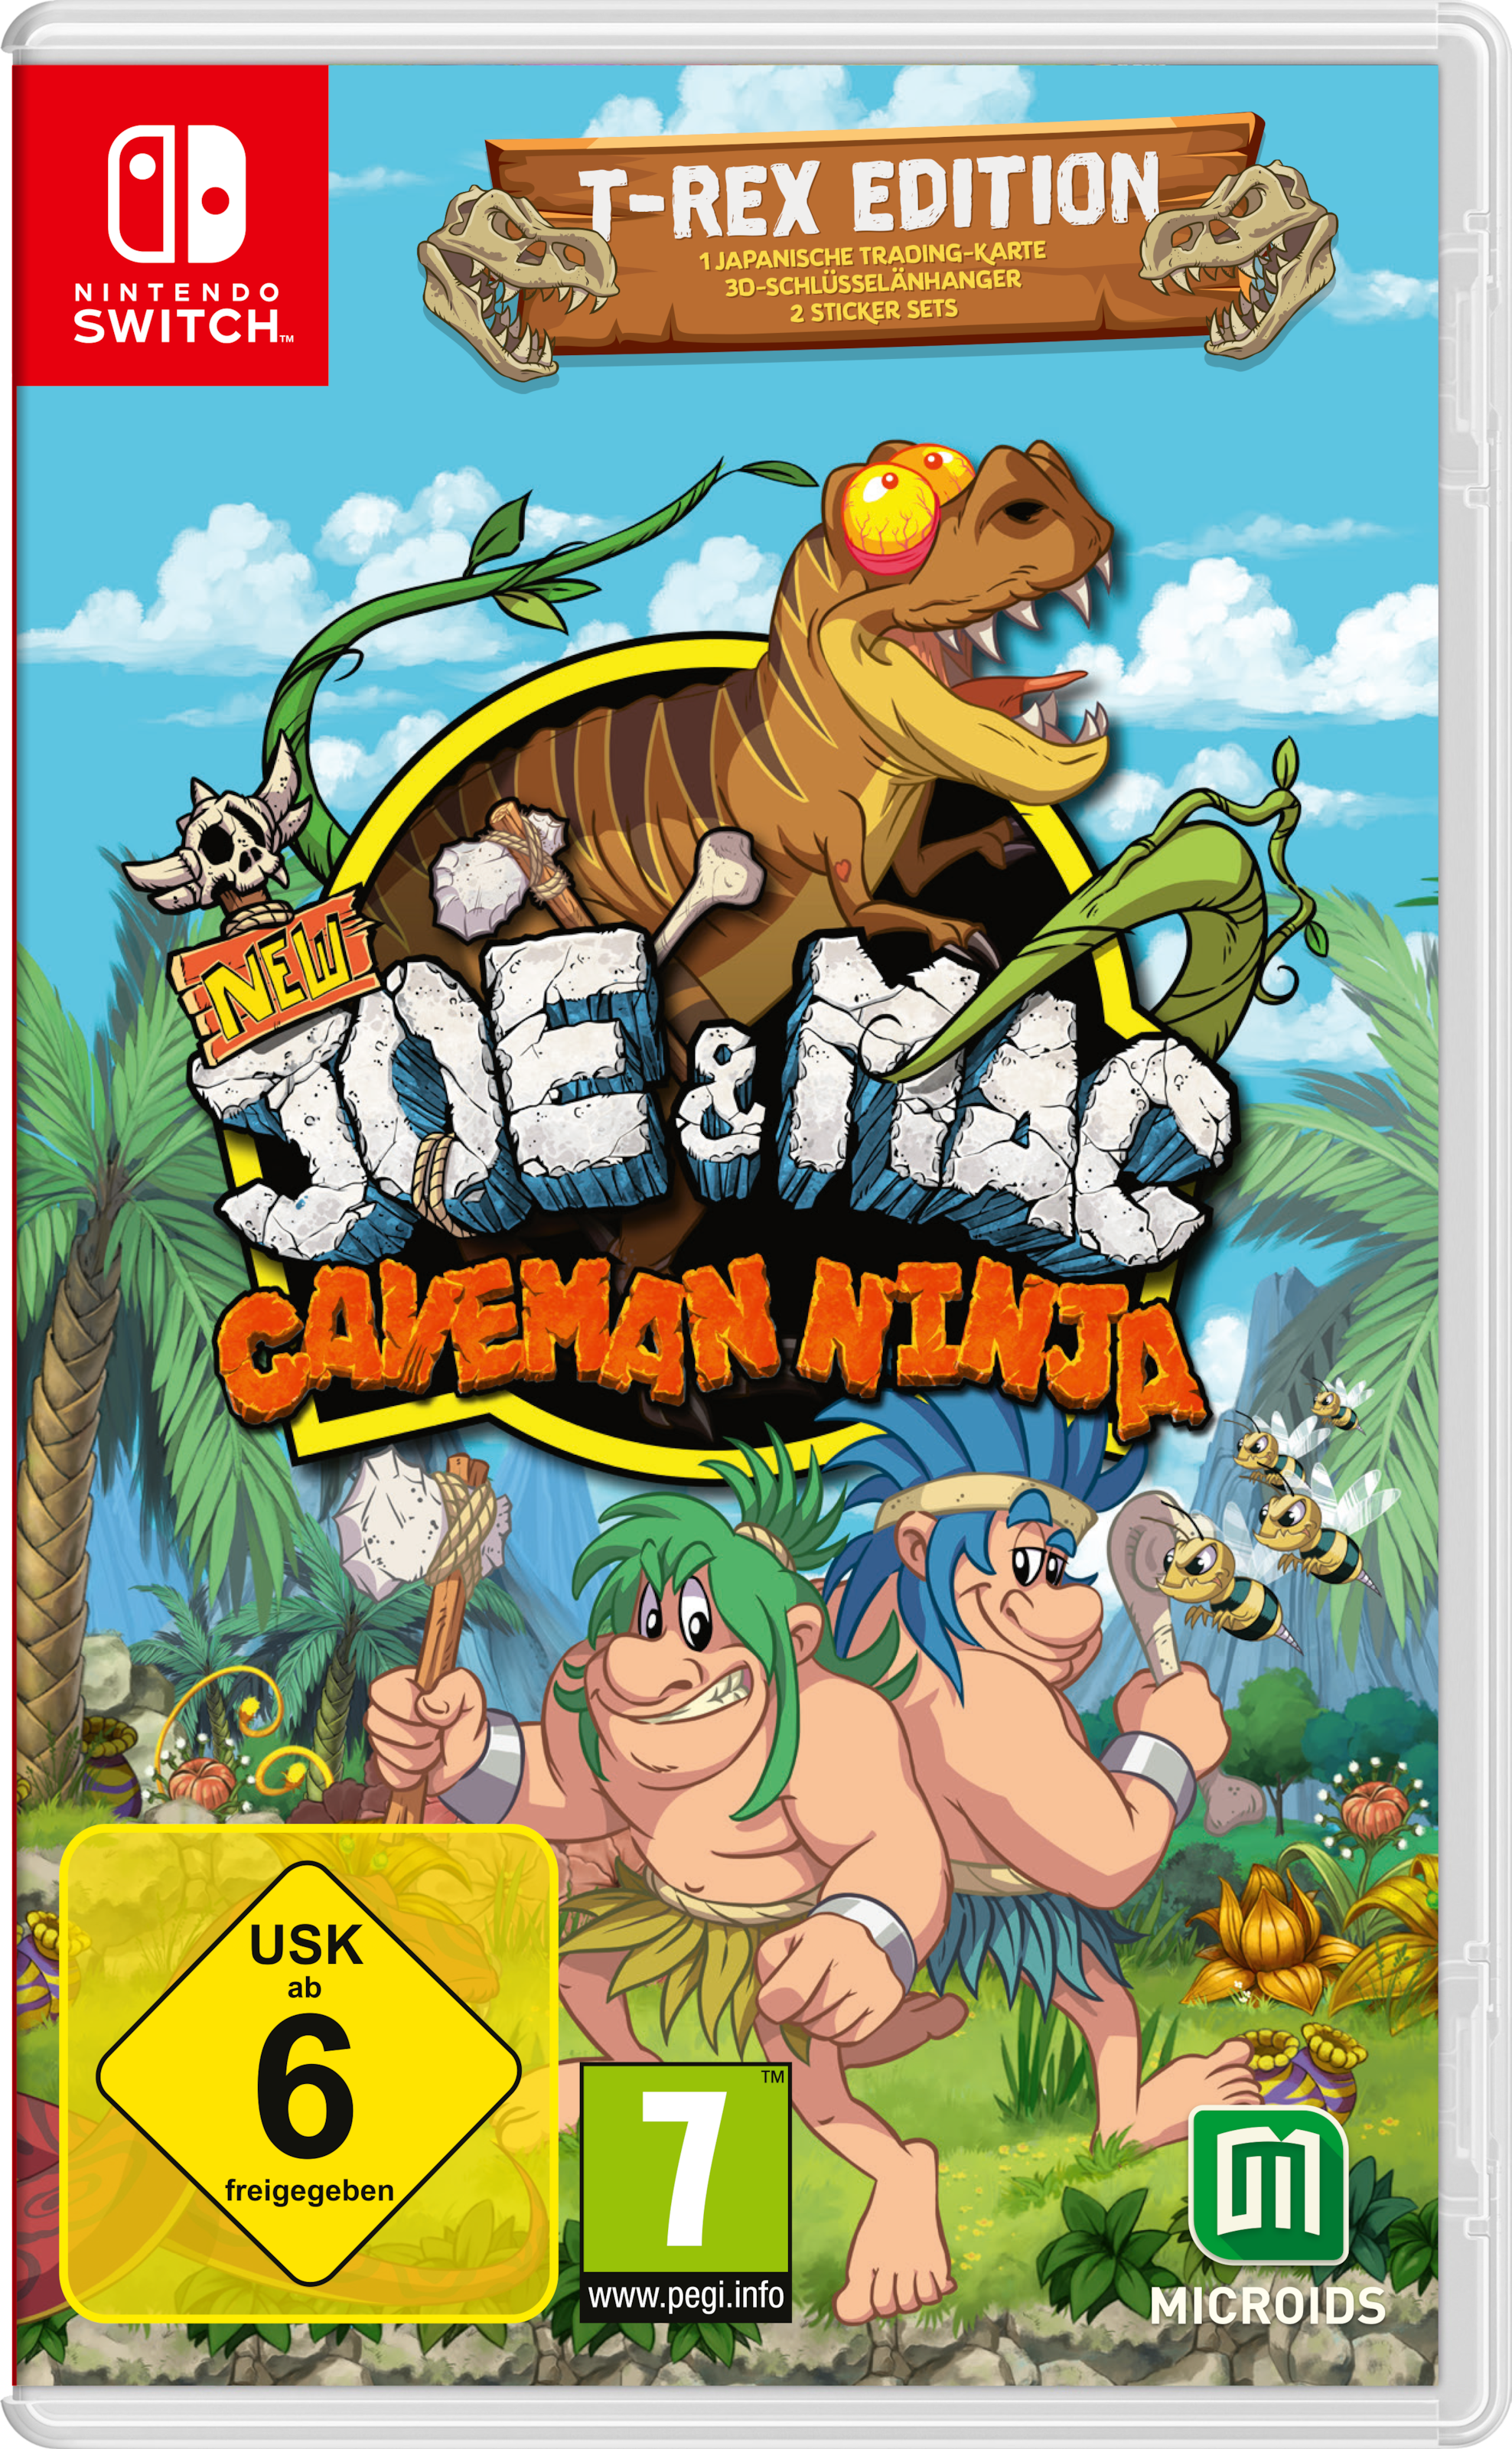 Spielesoftware Joe Switch OTTO online »New Mac: bei & jetzt Astragon T-Rex - Nintendo Caveman Edition«, Ninja